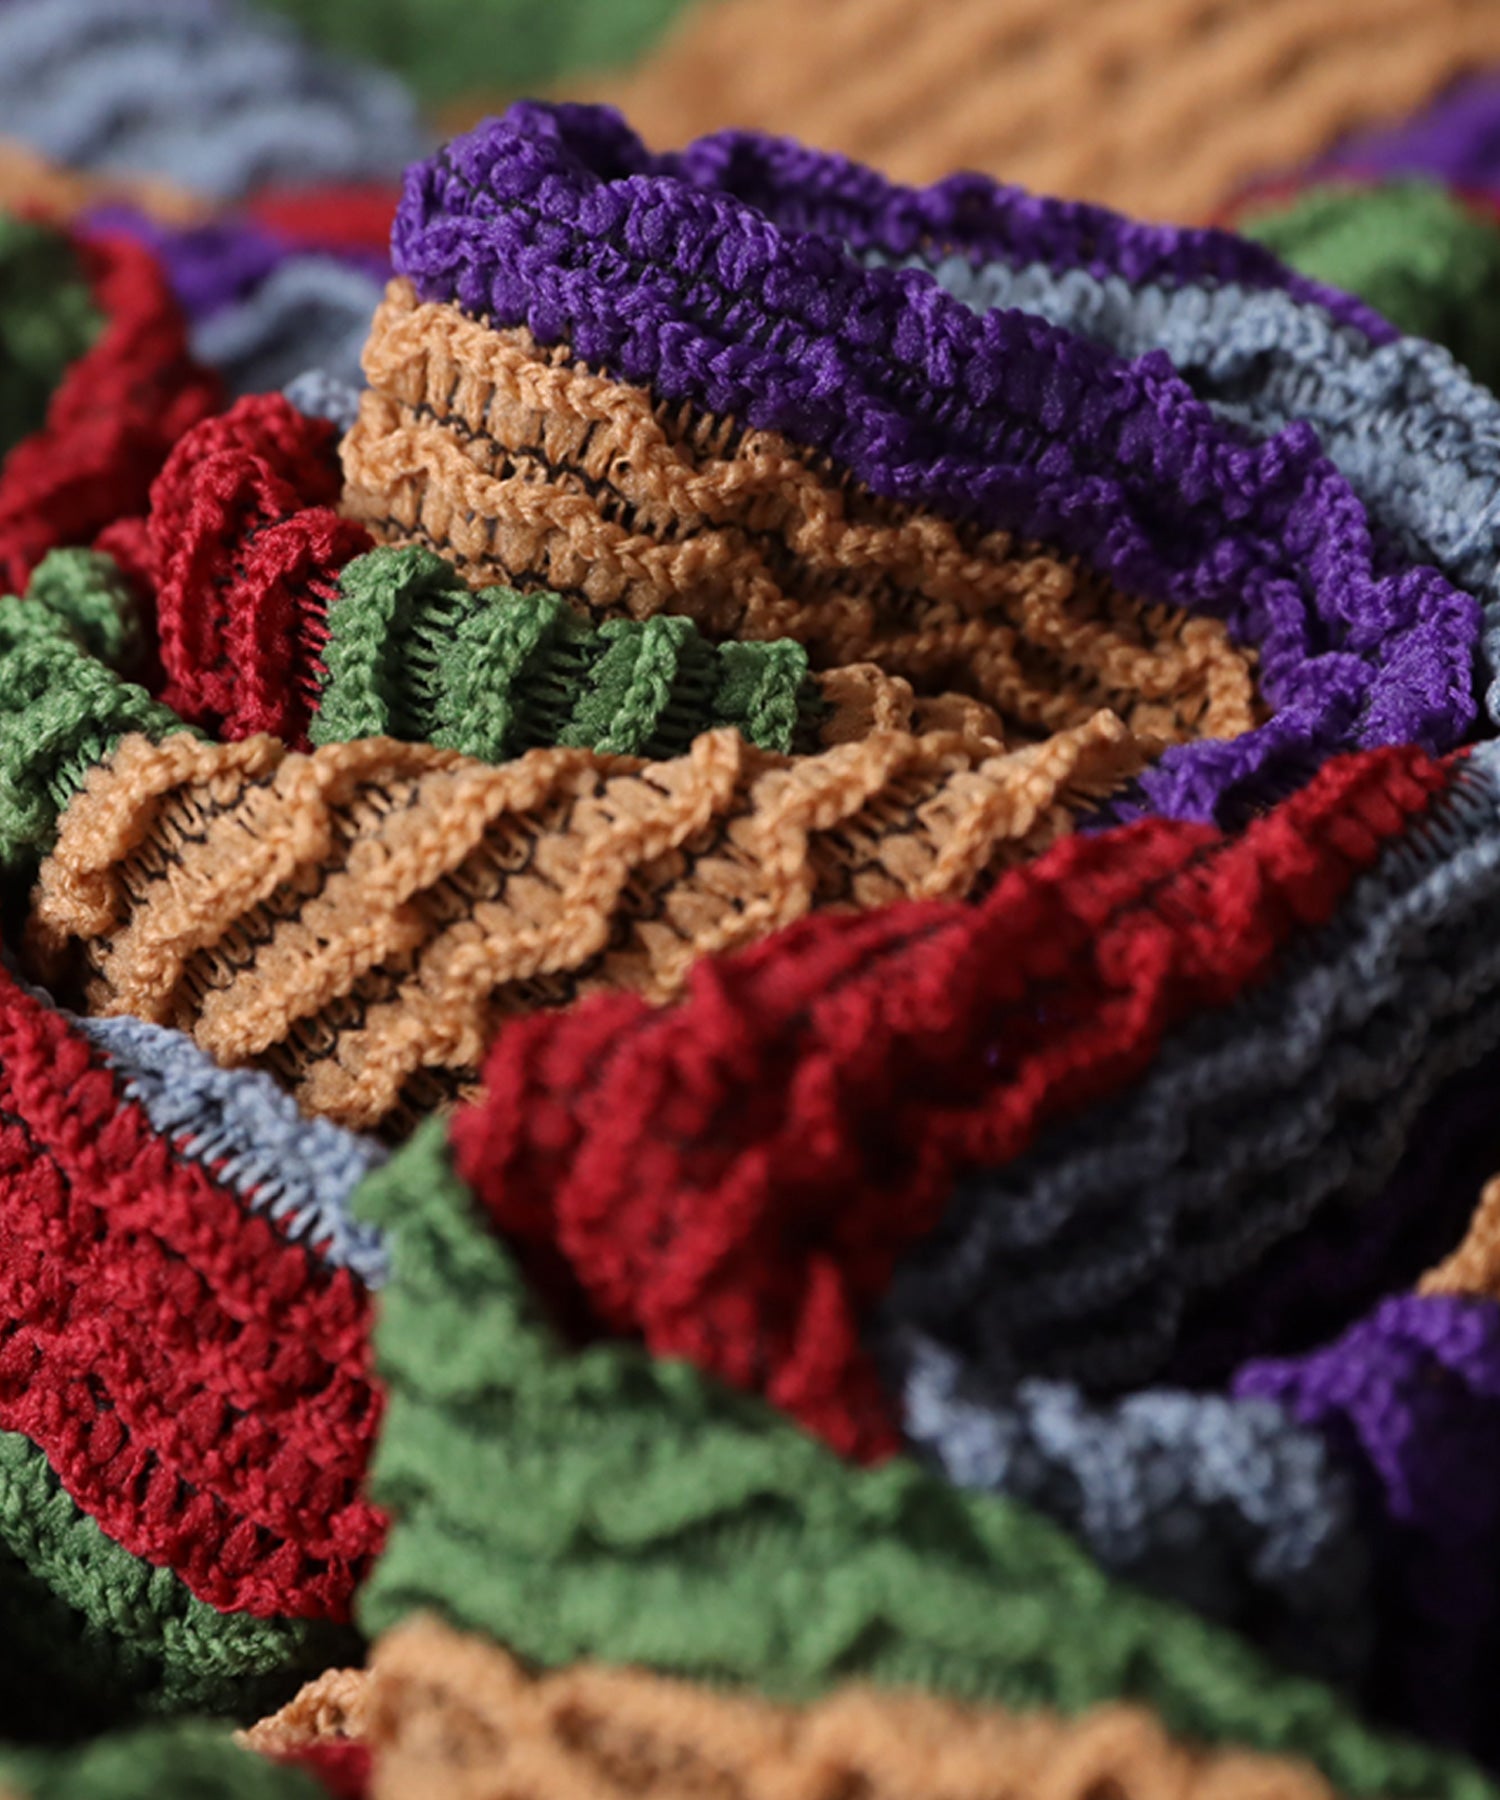 Colorful border knit skirt Ladies